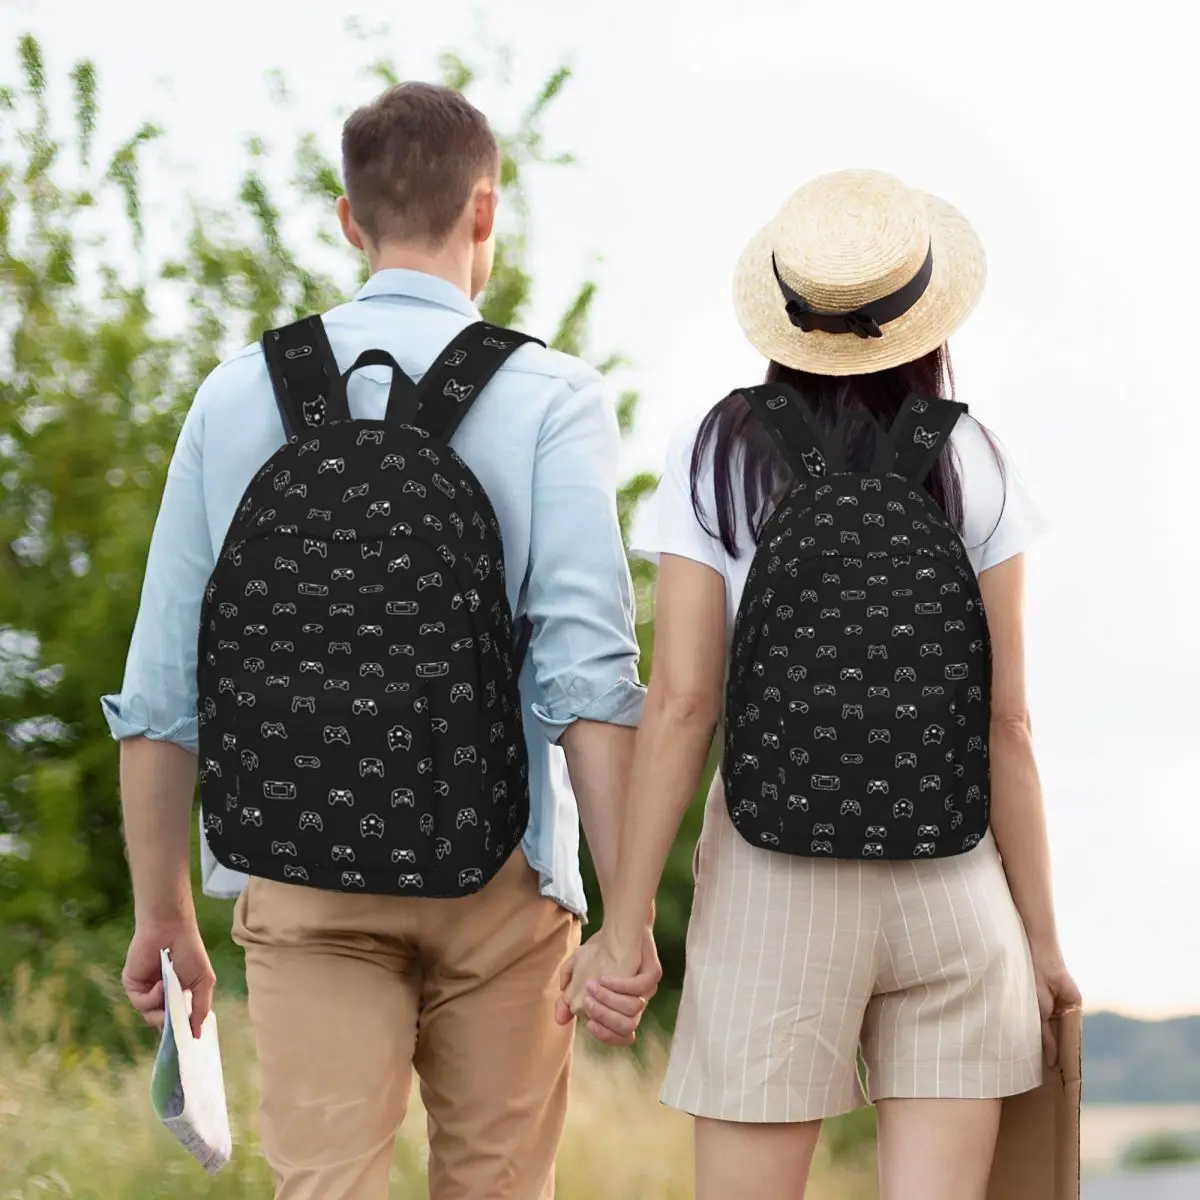 Video Game Controller Fashion Backpack Lightweight High School Work Daypack for Men Women College Shoulder Bag